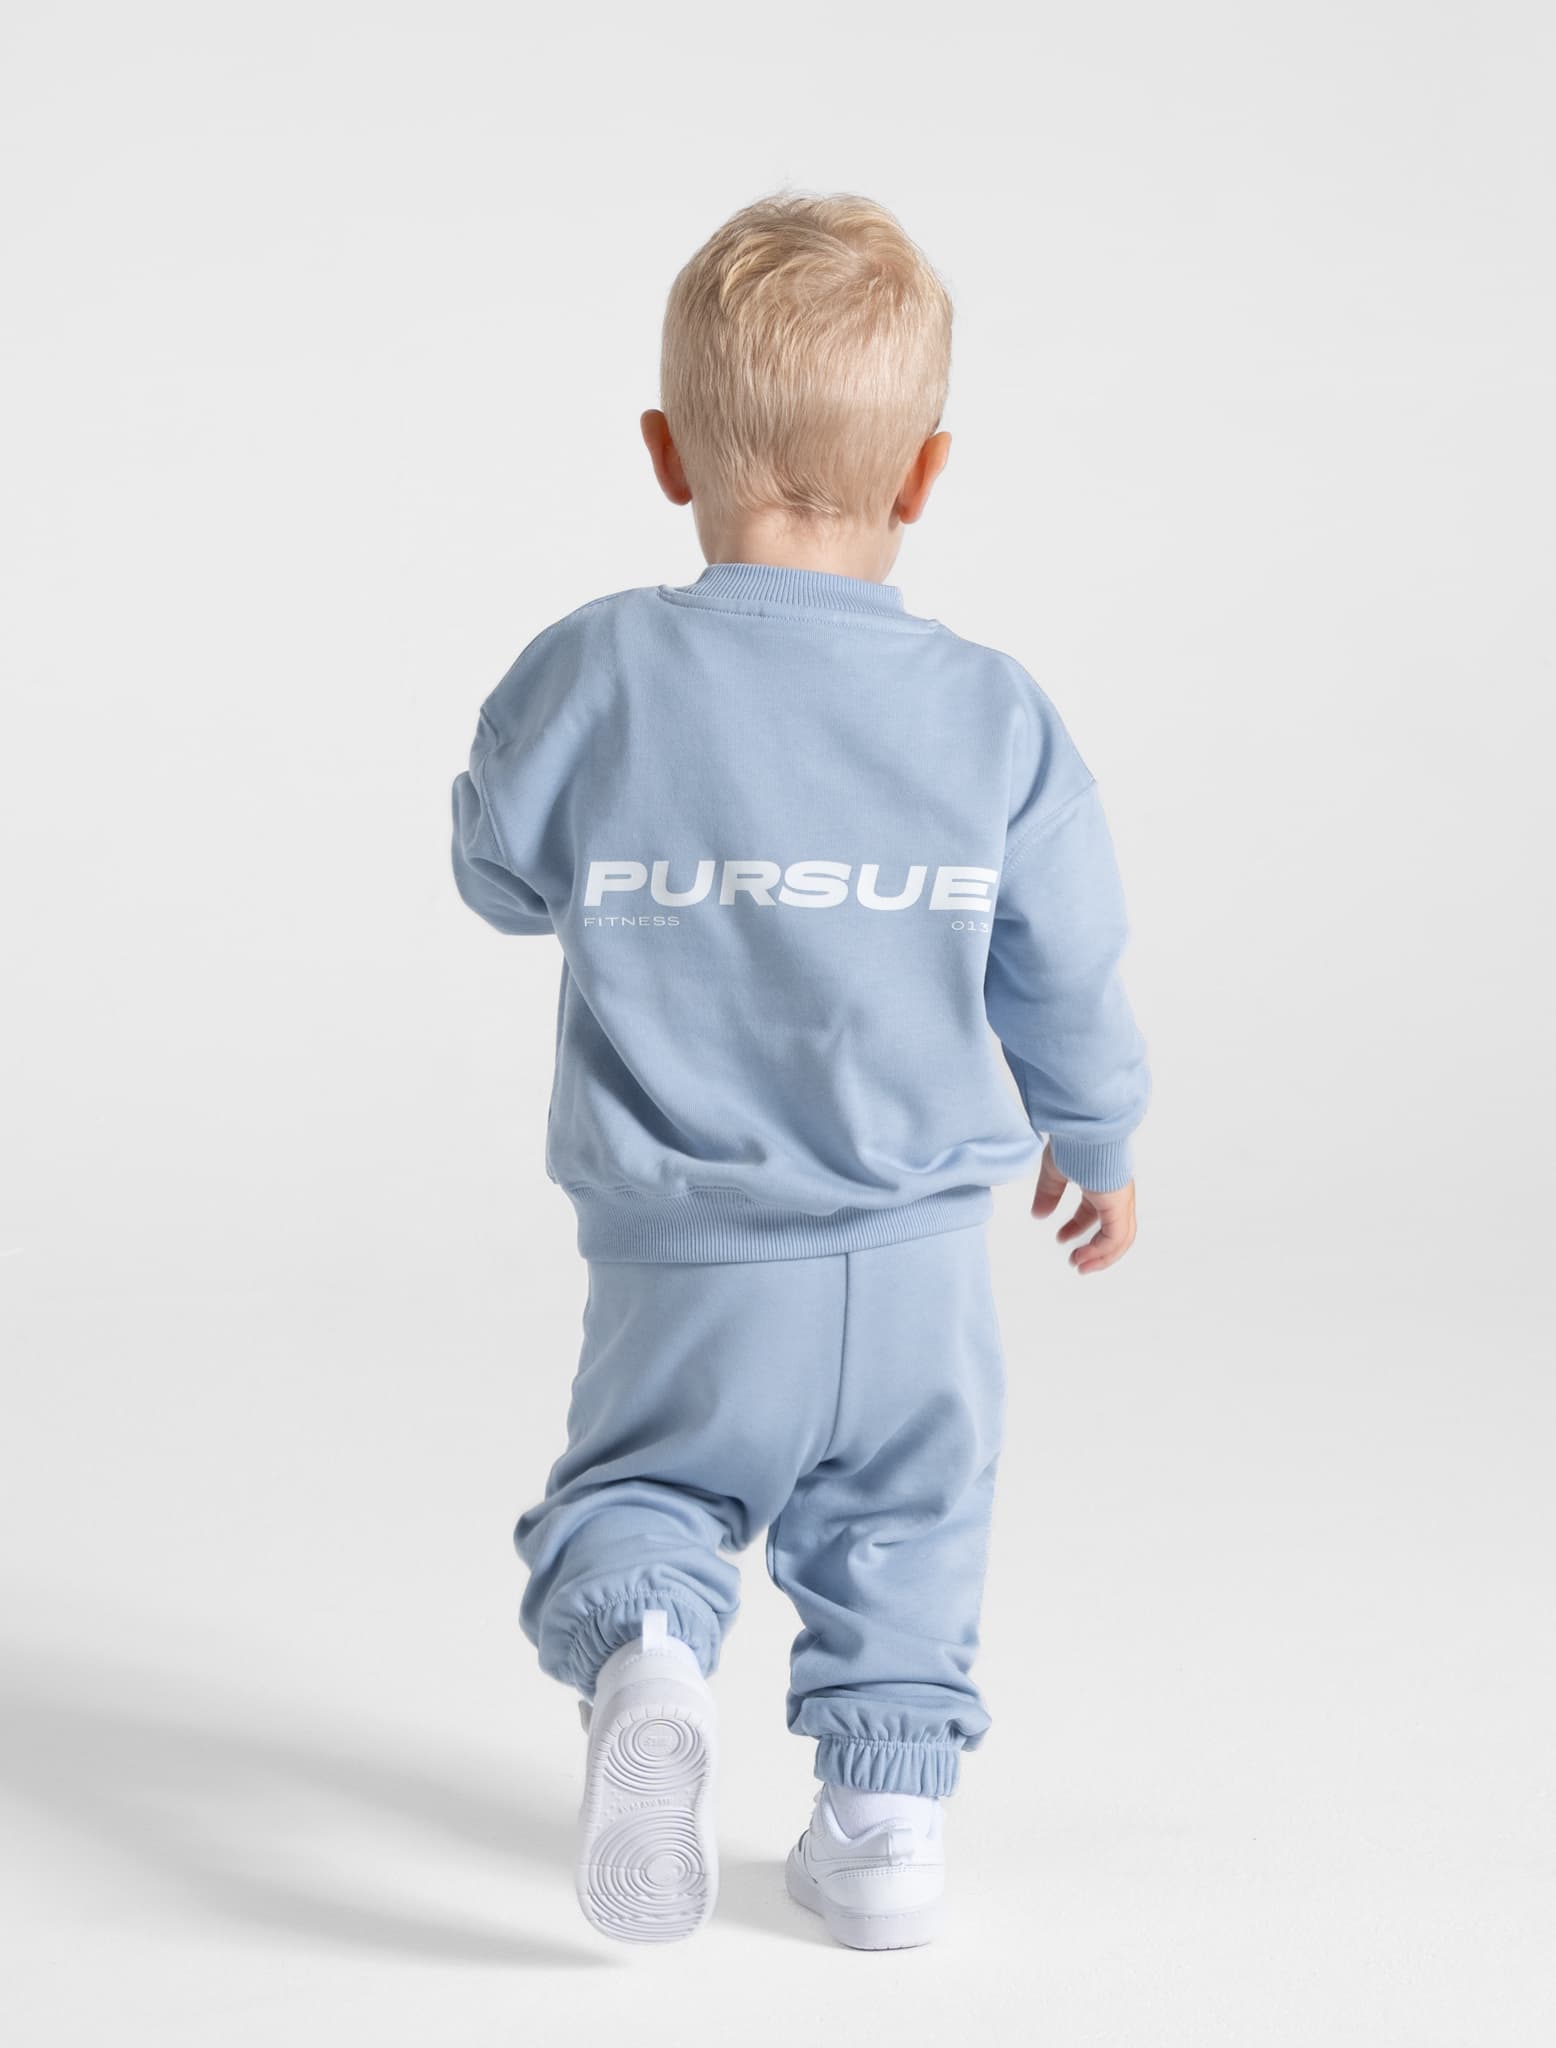 Kids Sweater / Dusky Blue Pursue Fitness 1